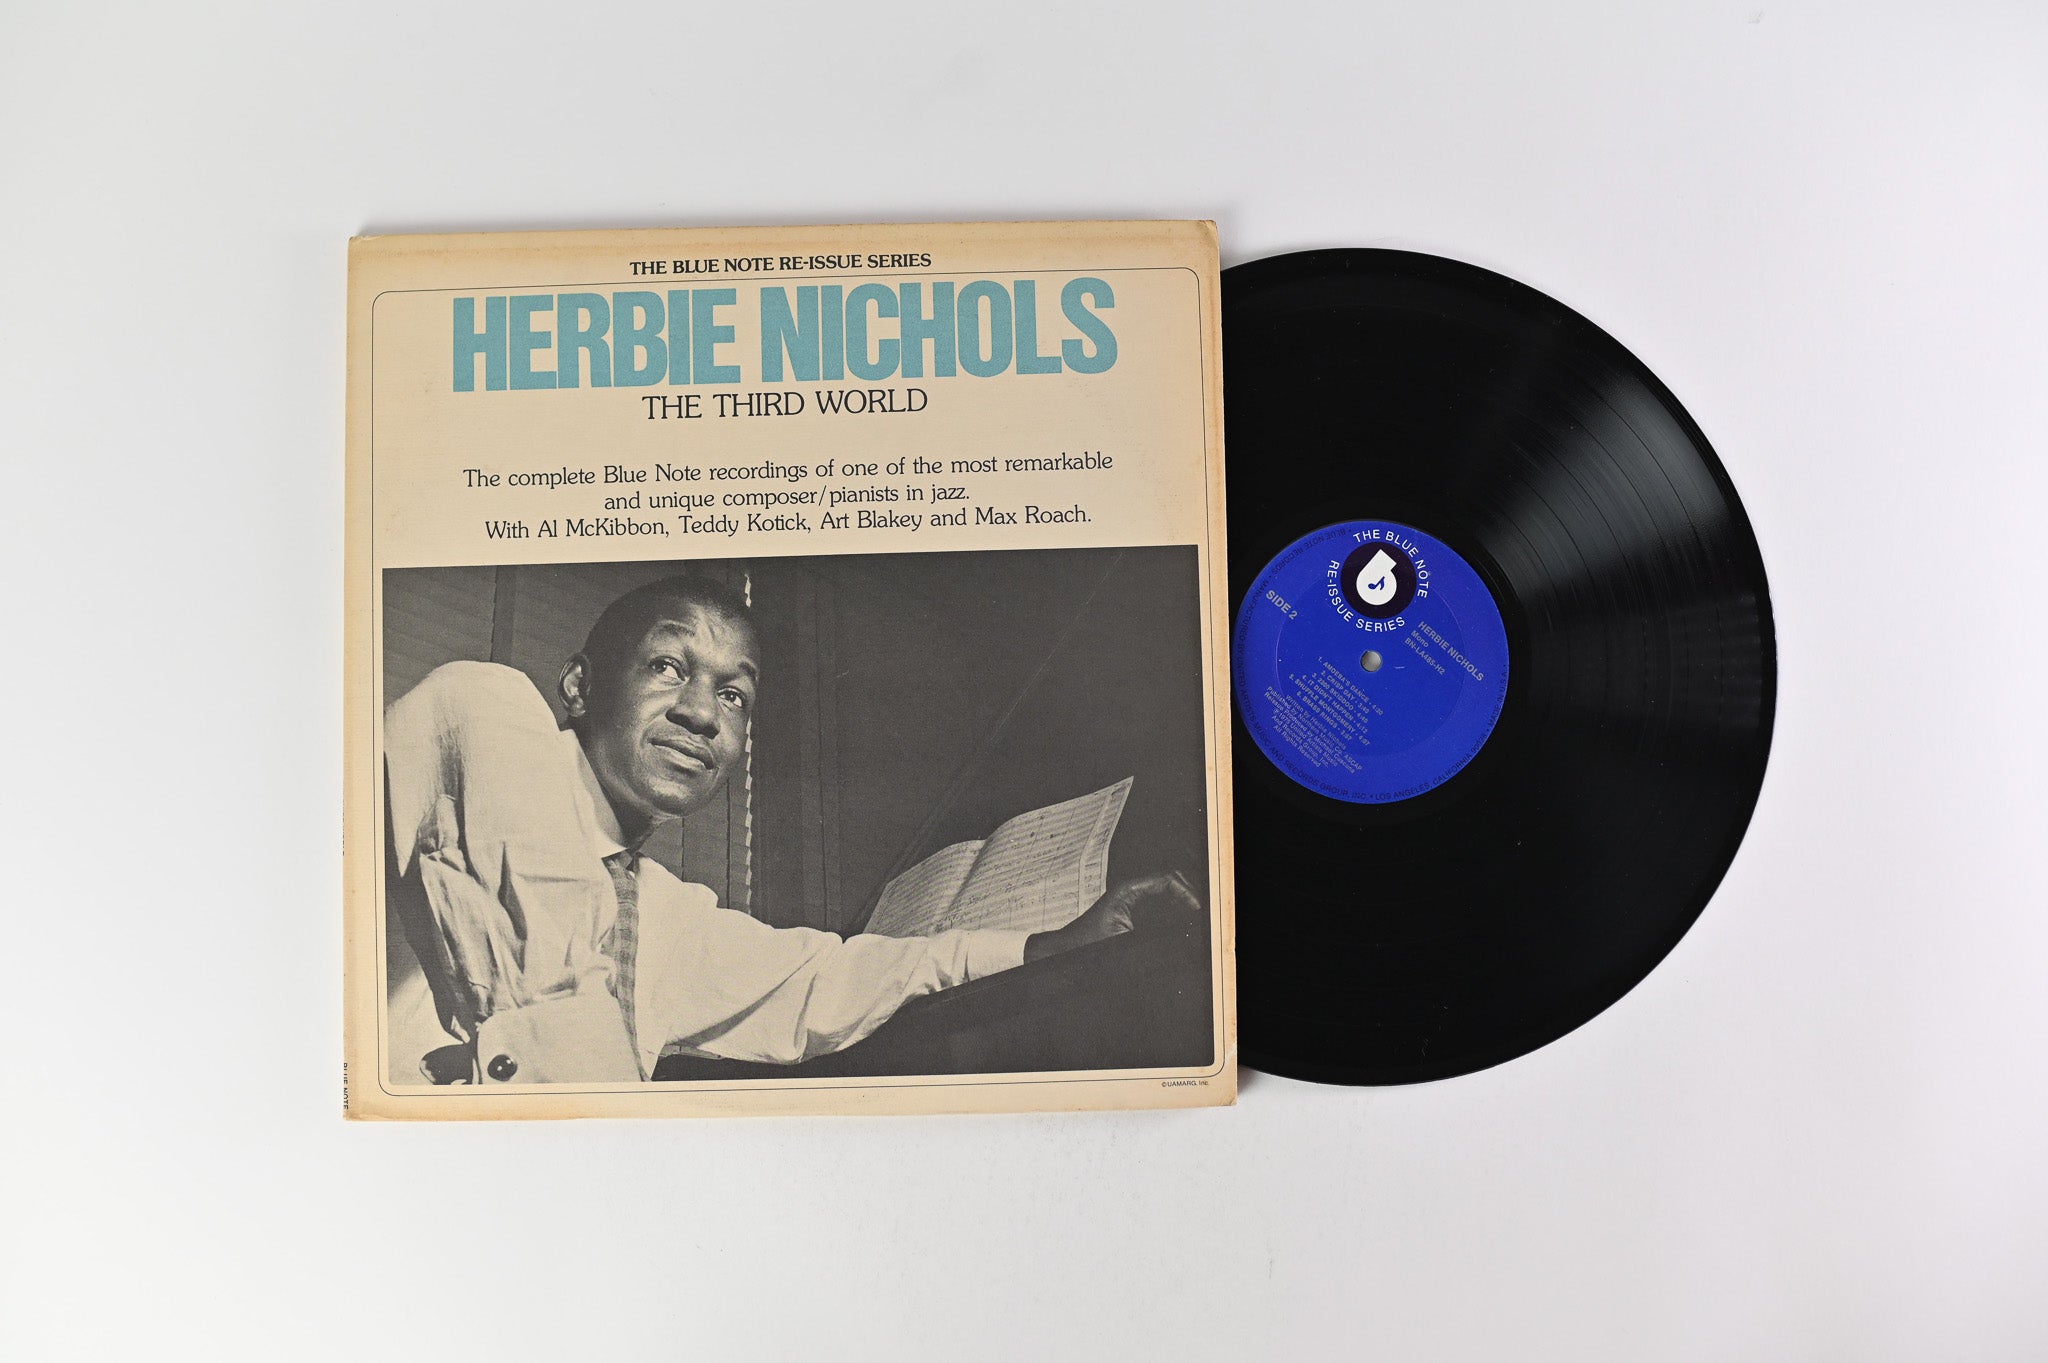 Herbie Nichols - The Third World on Blue Note